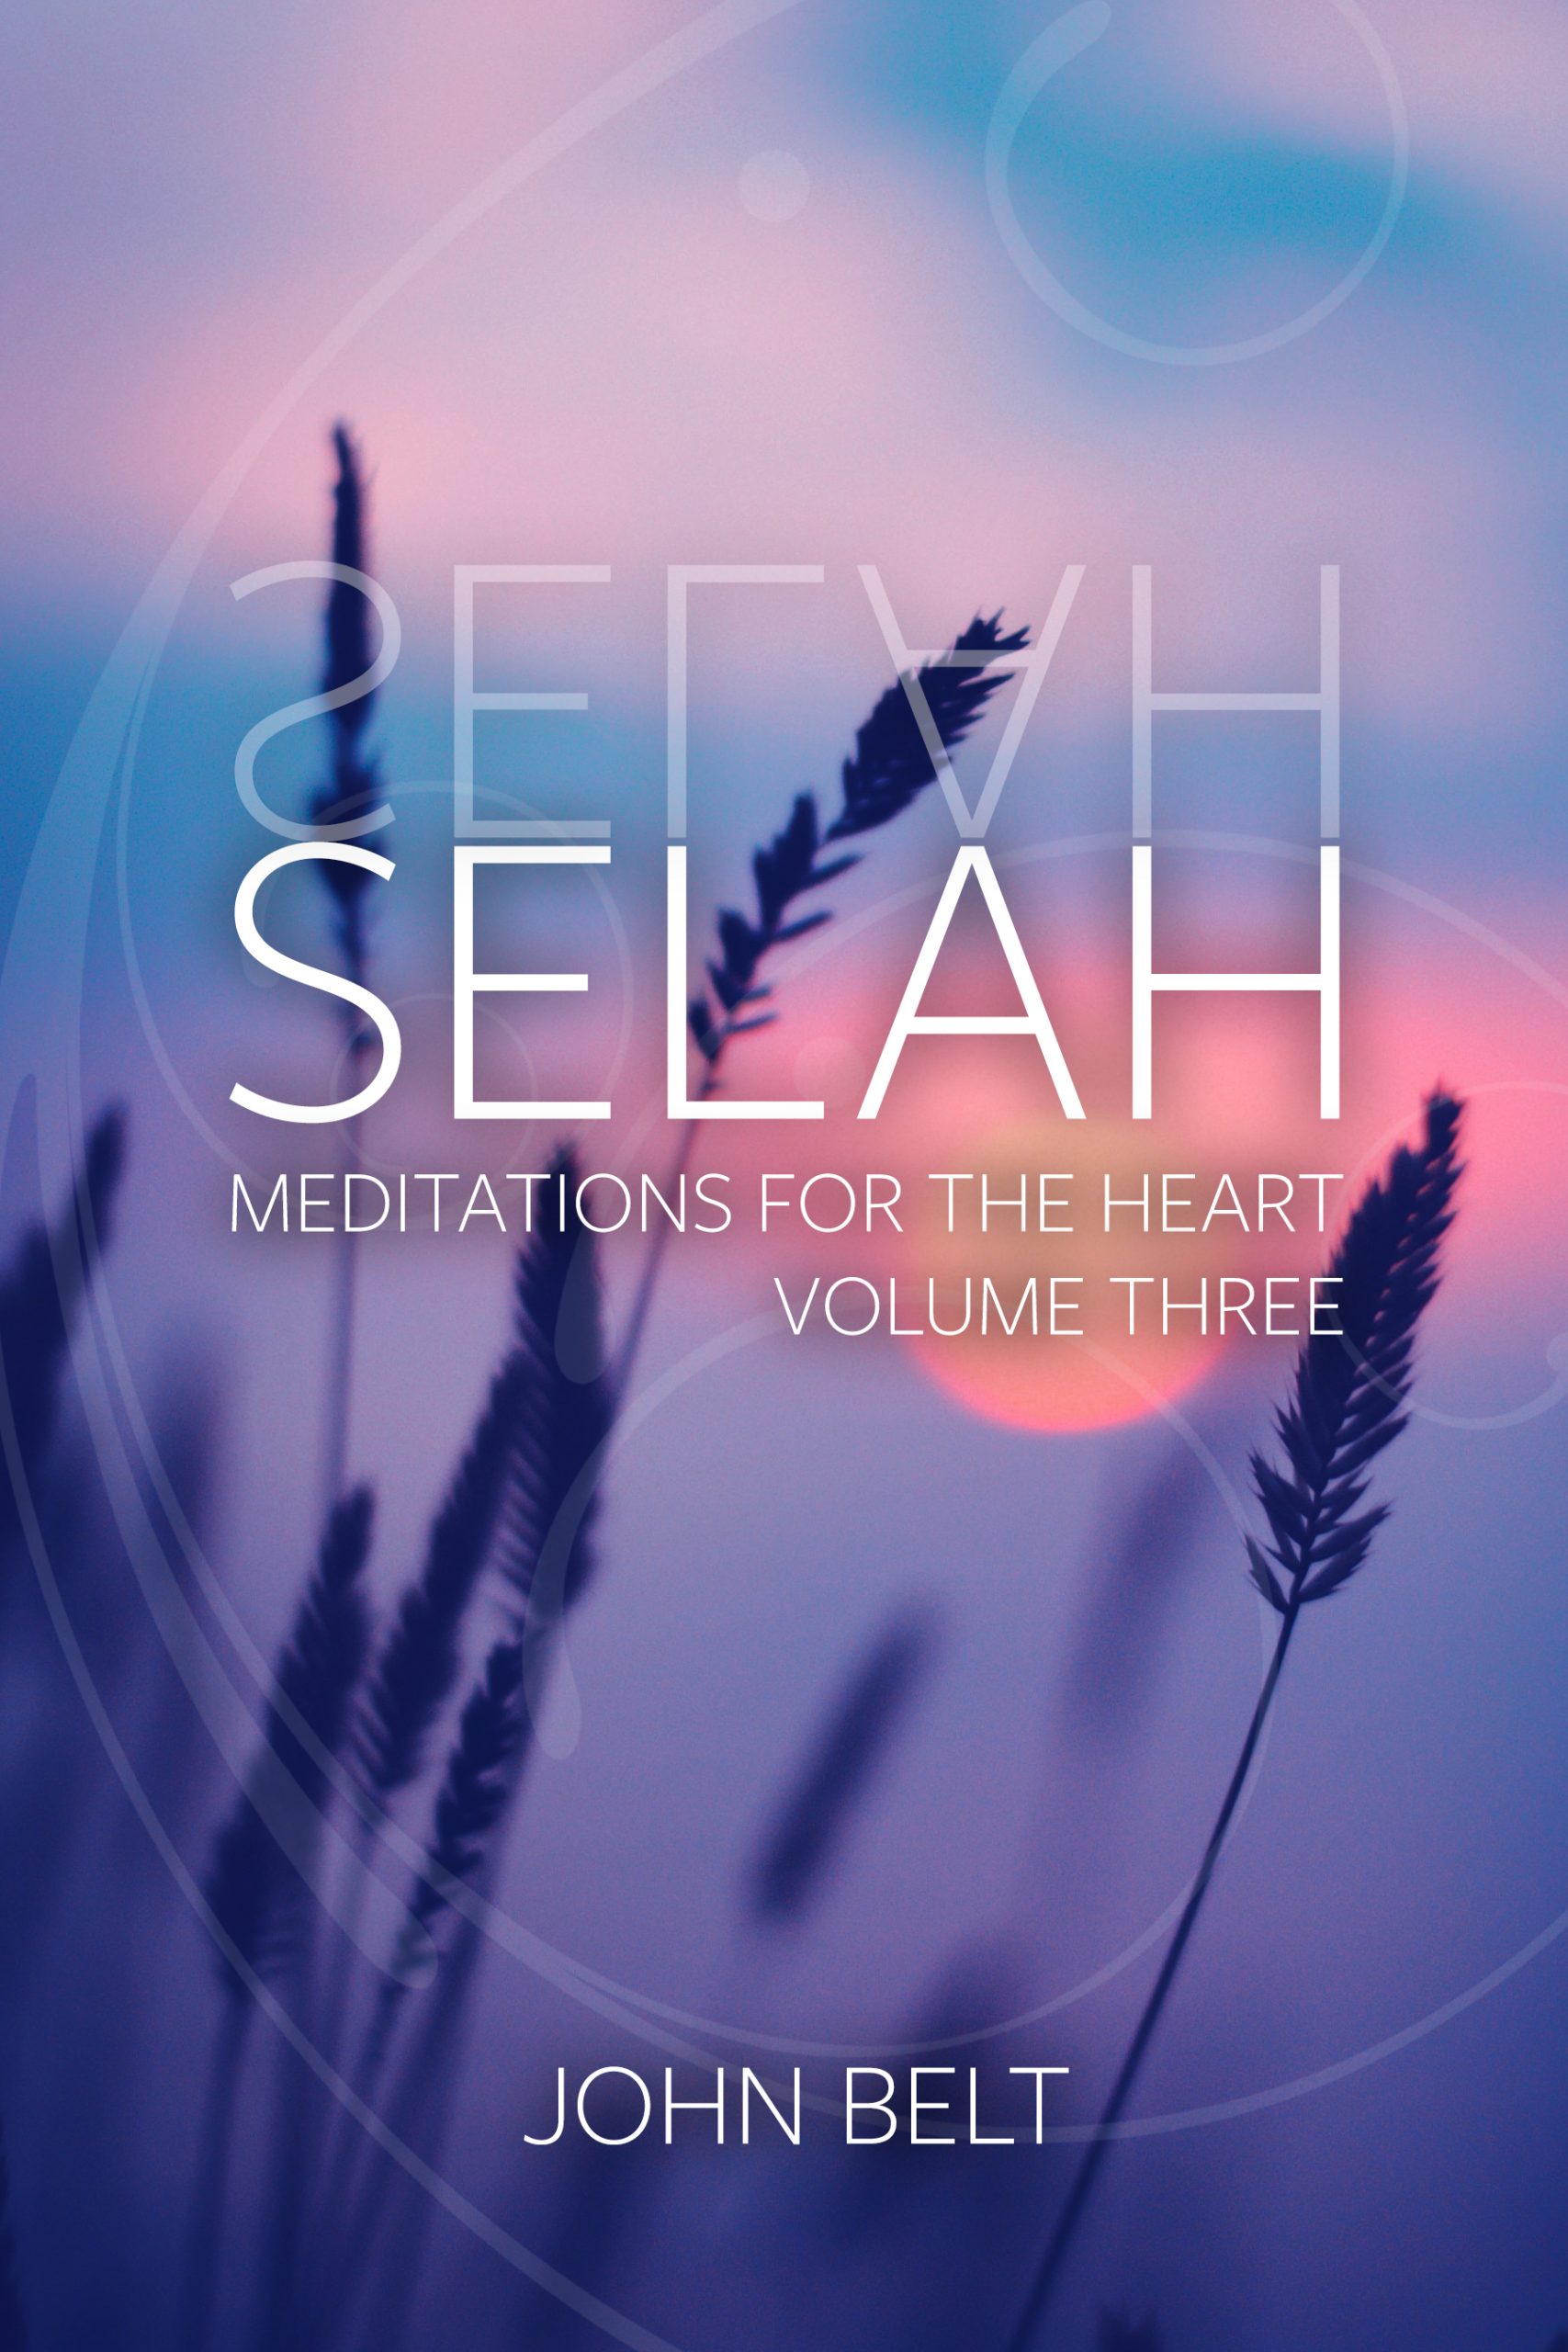 Selah-Vol.-2-Cover-scaled-1.jpeg